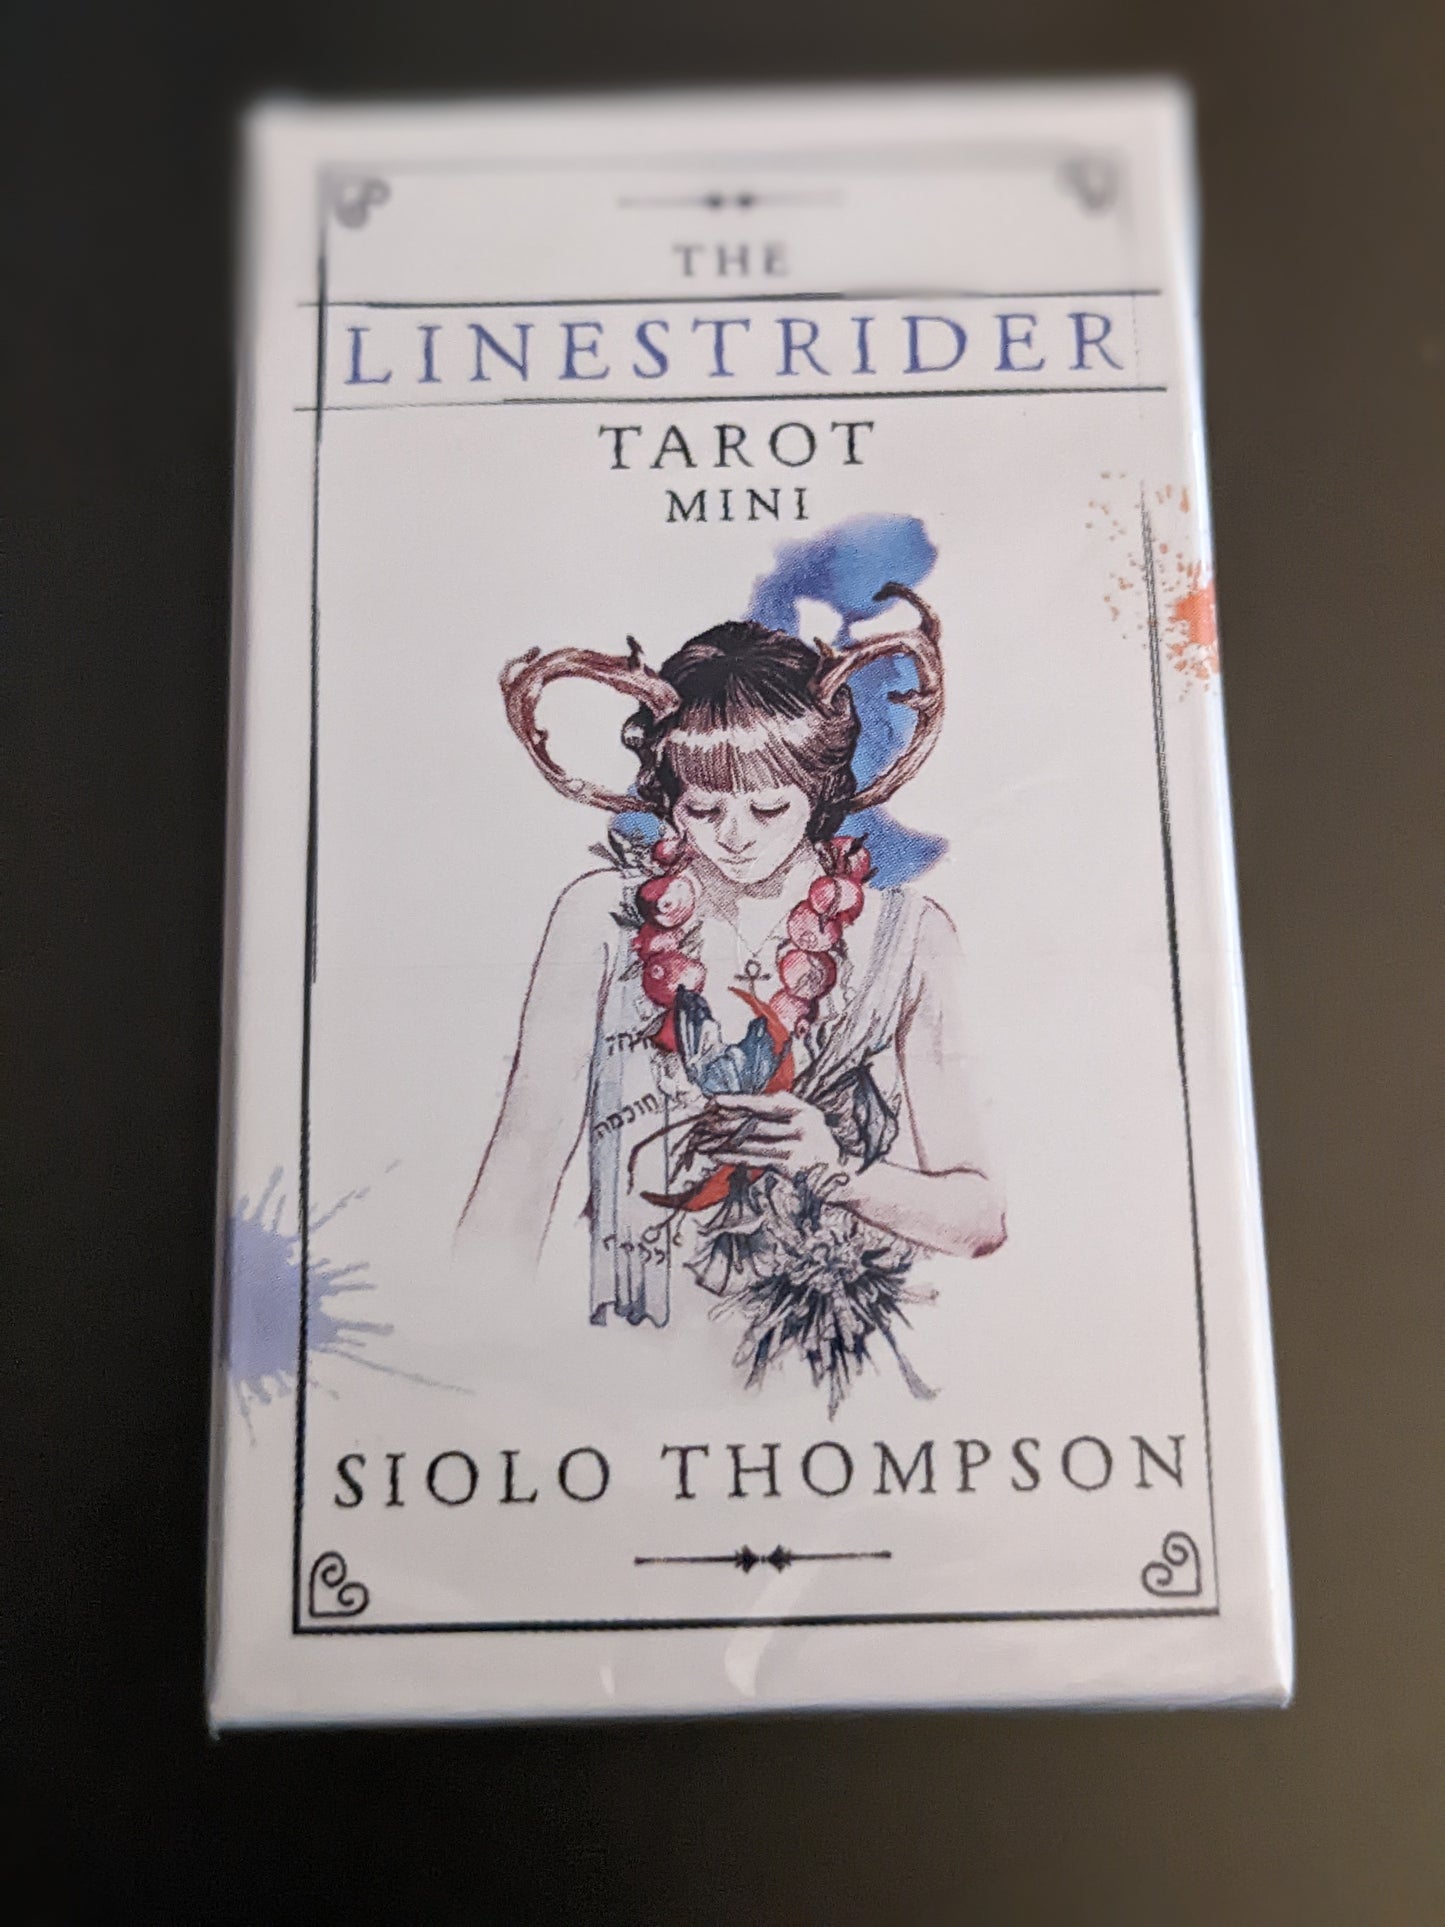 The Linestrider Mini Tarot